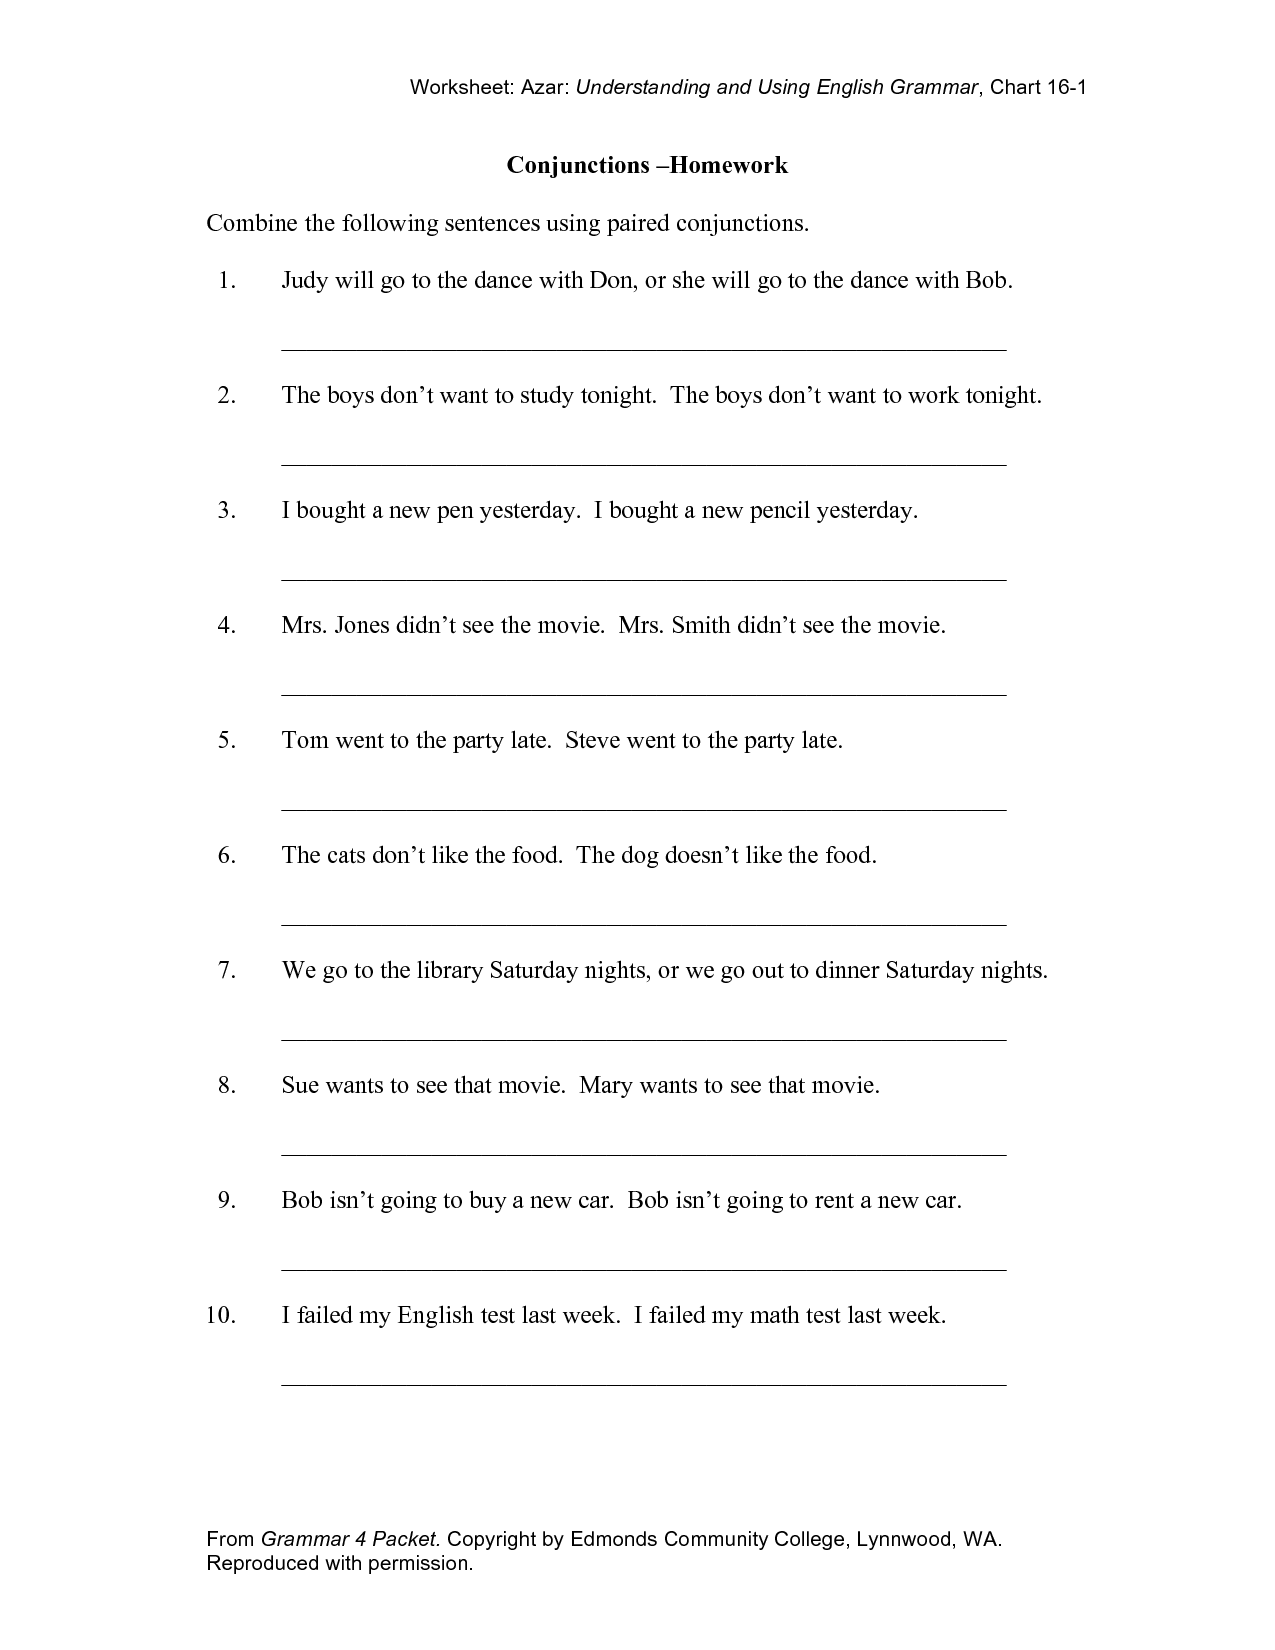 Combining Sentences Worksheet 6th Grade Ereading